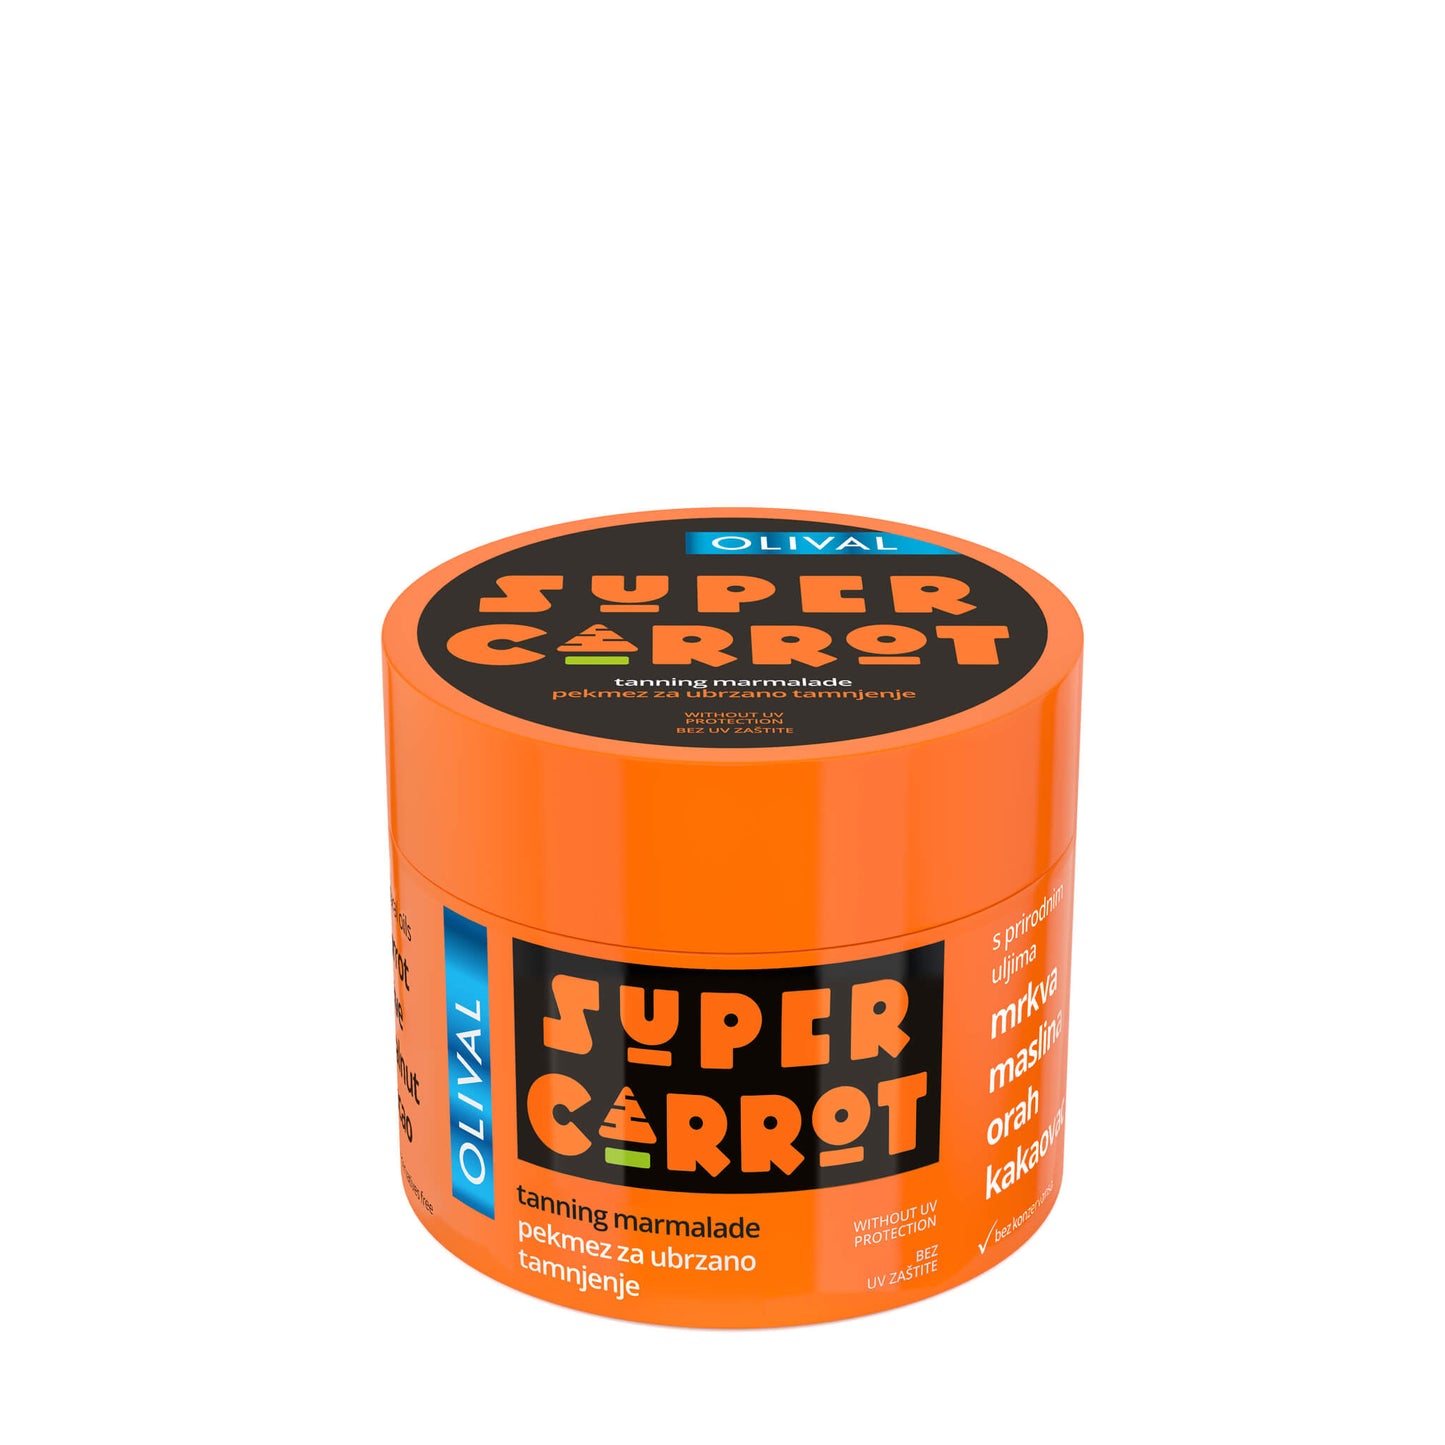 SUPER Carrot Tanning Marmalade